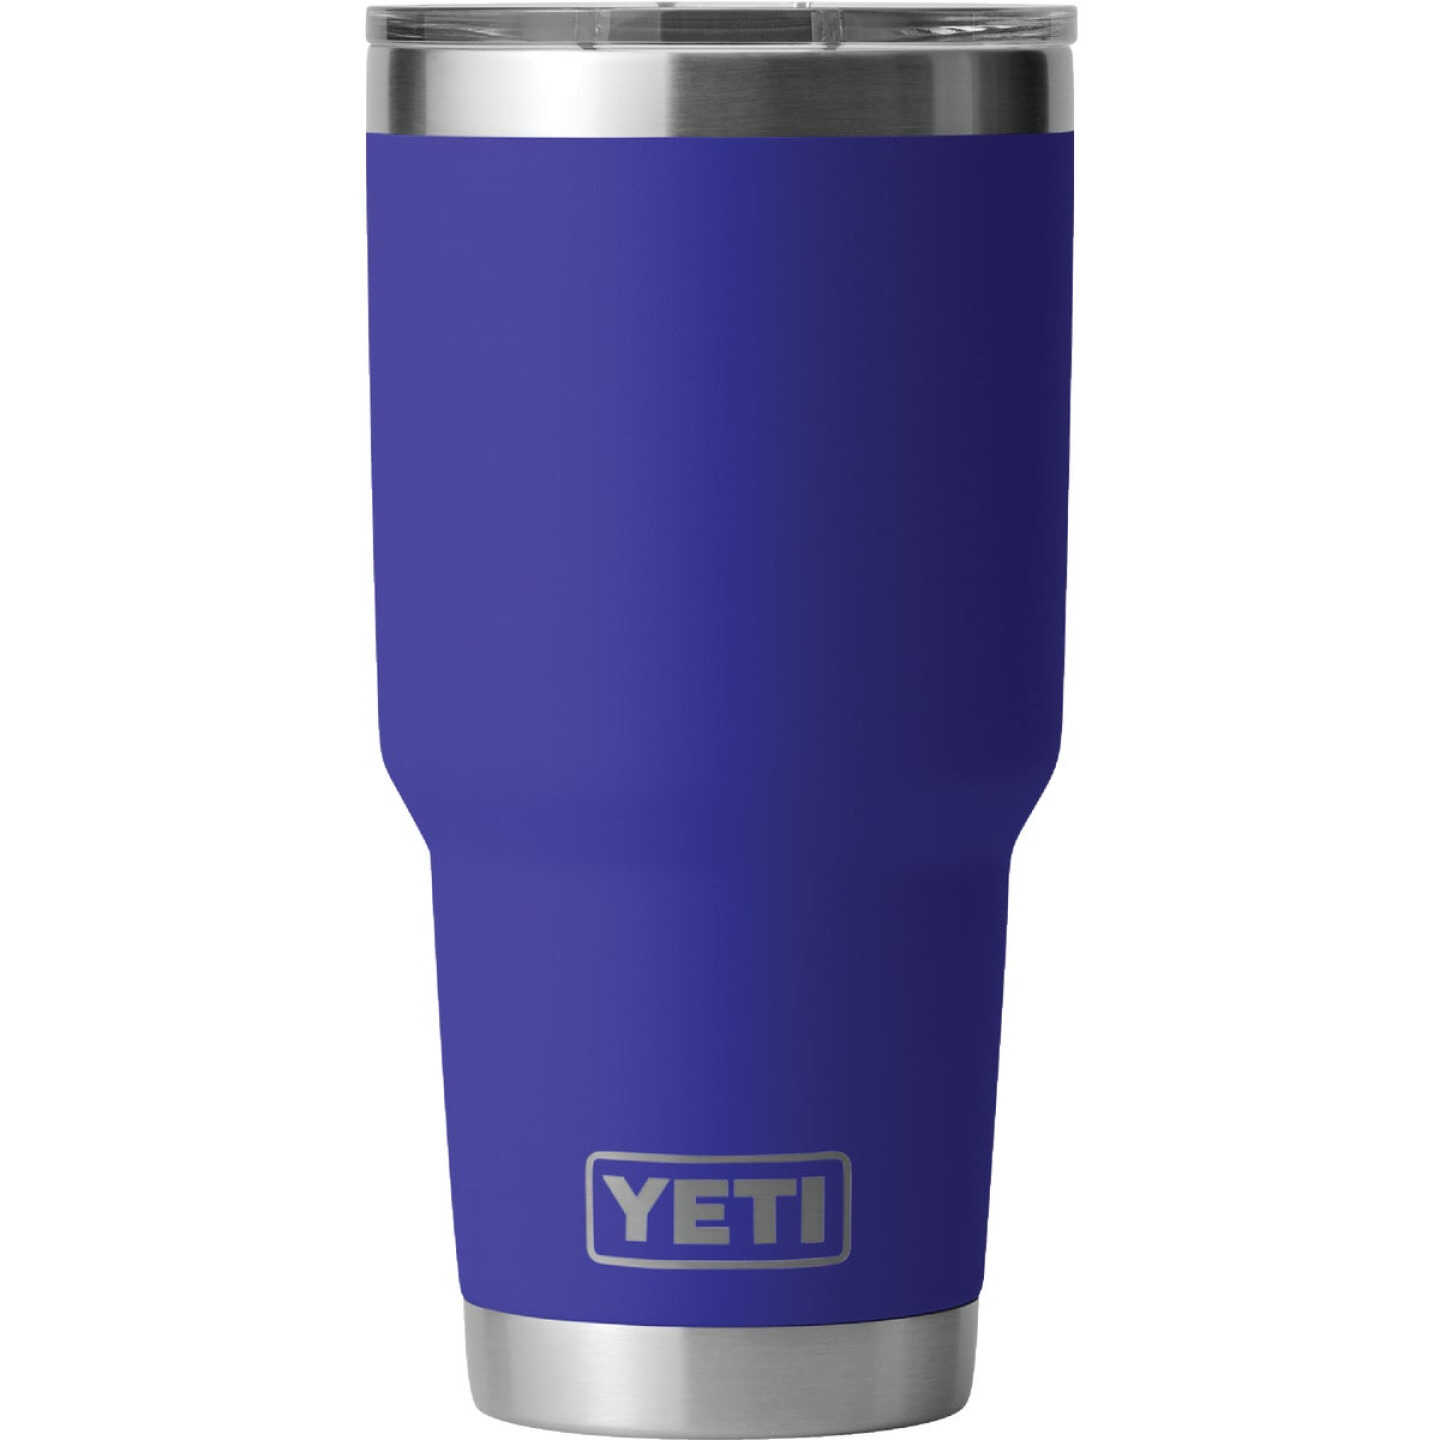 Yeti Rambler 30 Oz. Travel Mug, Offshore Blue - Schnarr's Hardware